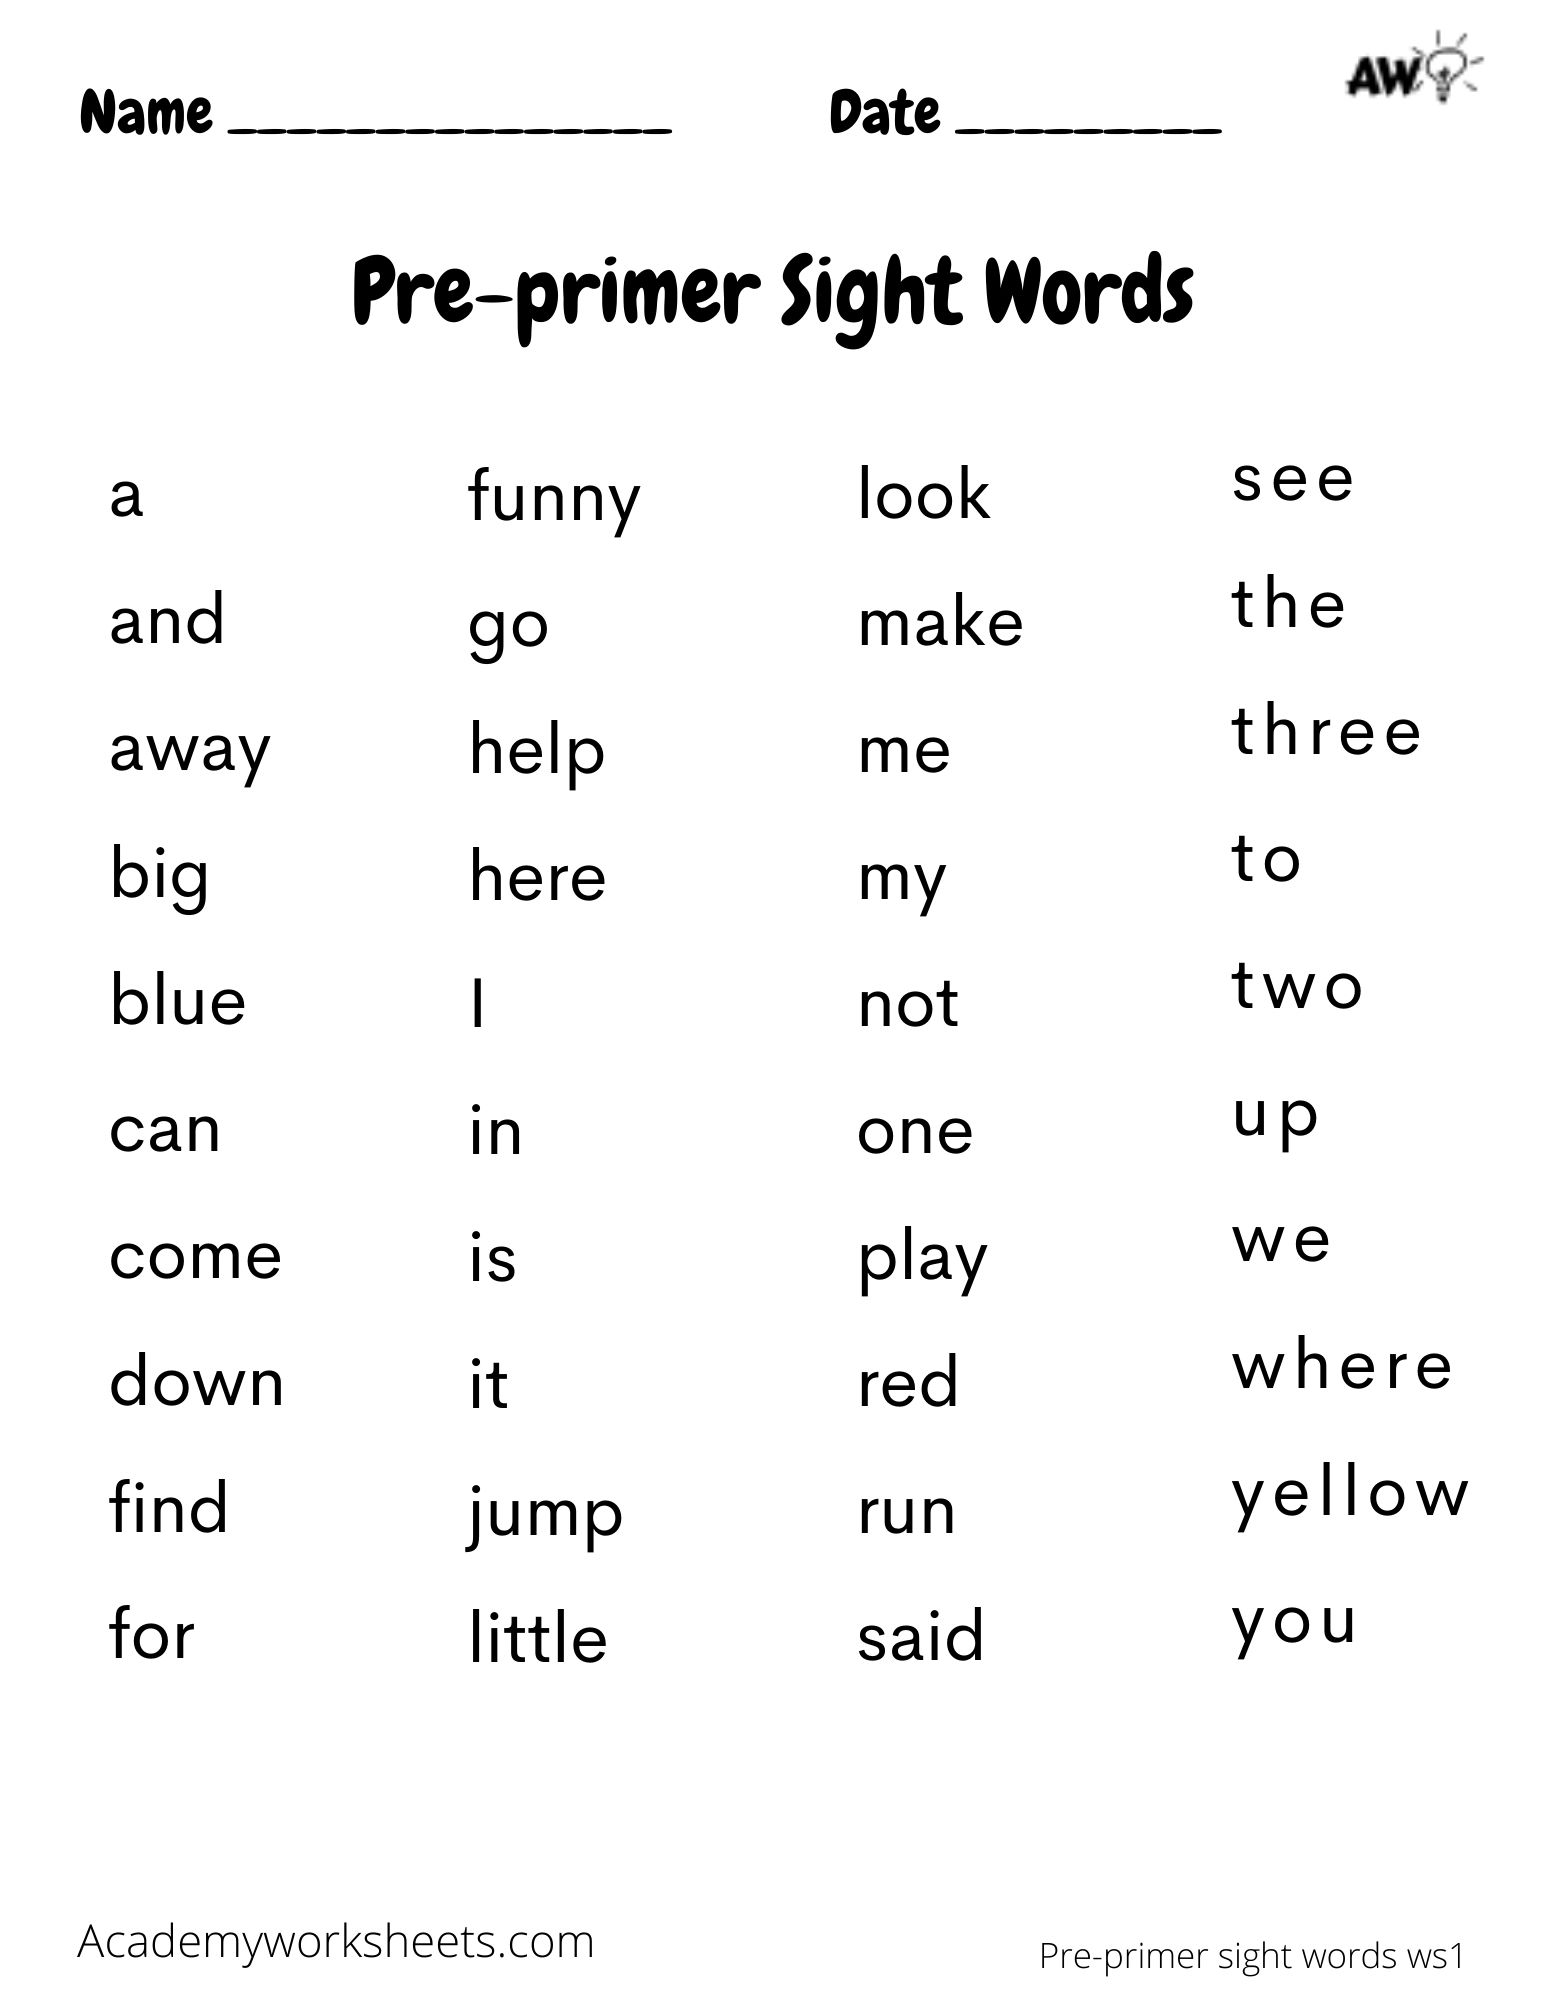 pre-primer-sight-words-dolche-academy-worksheets